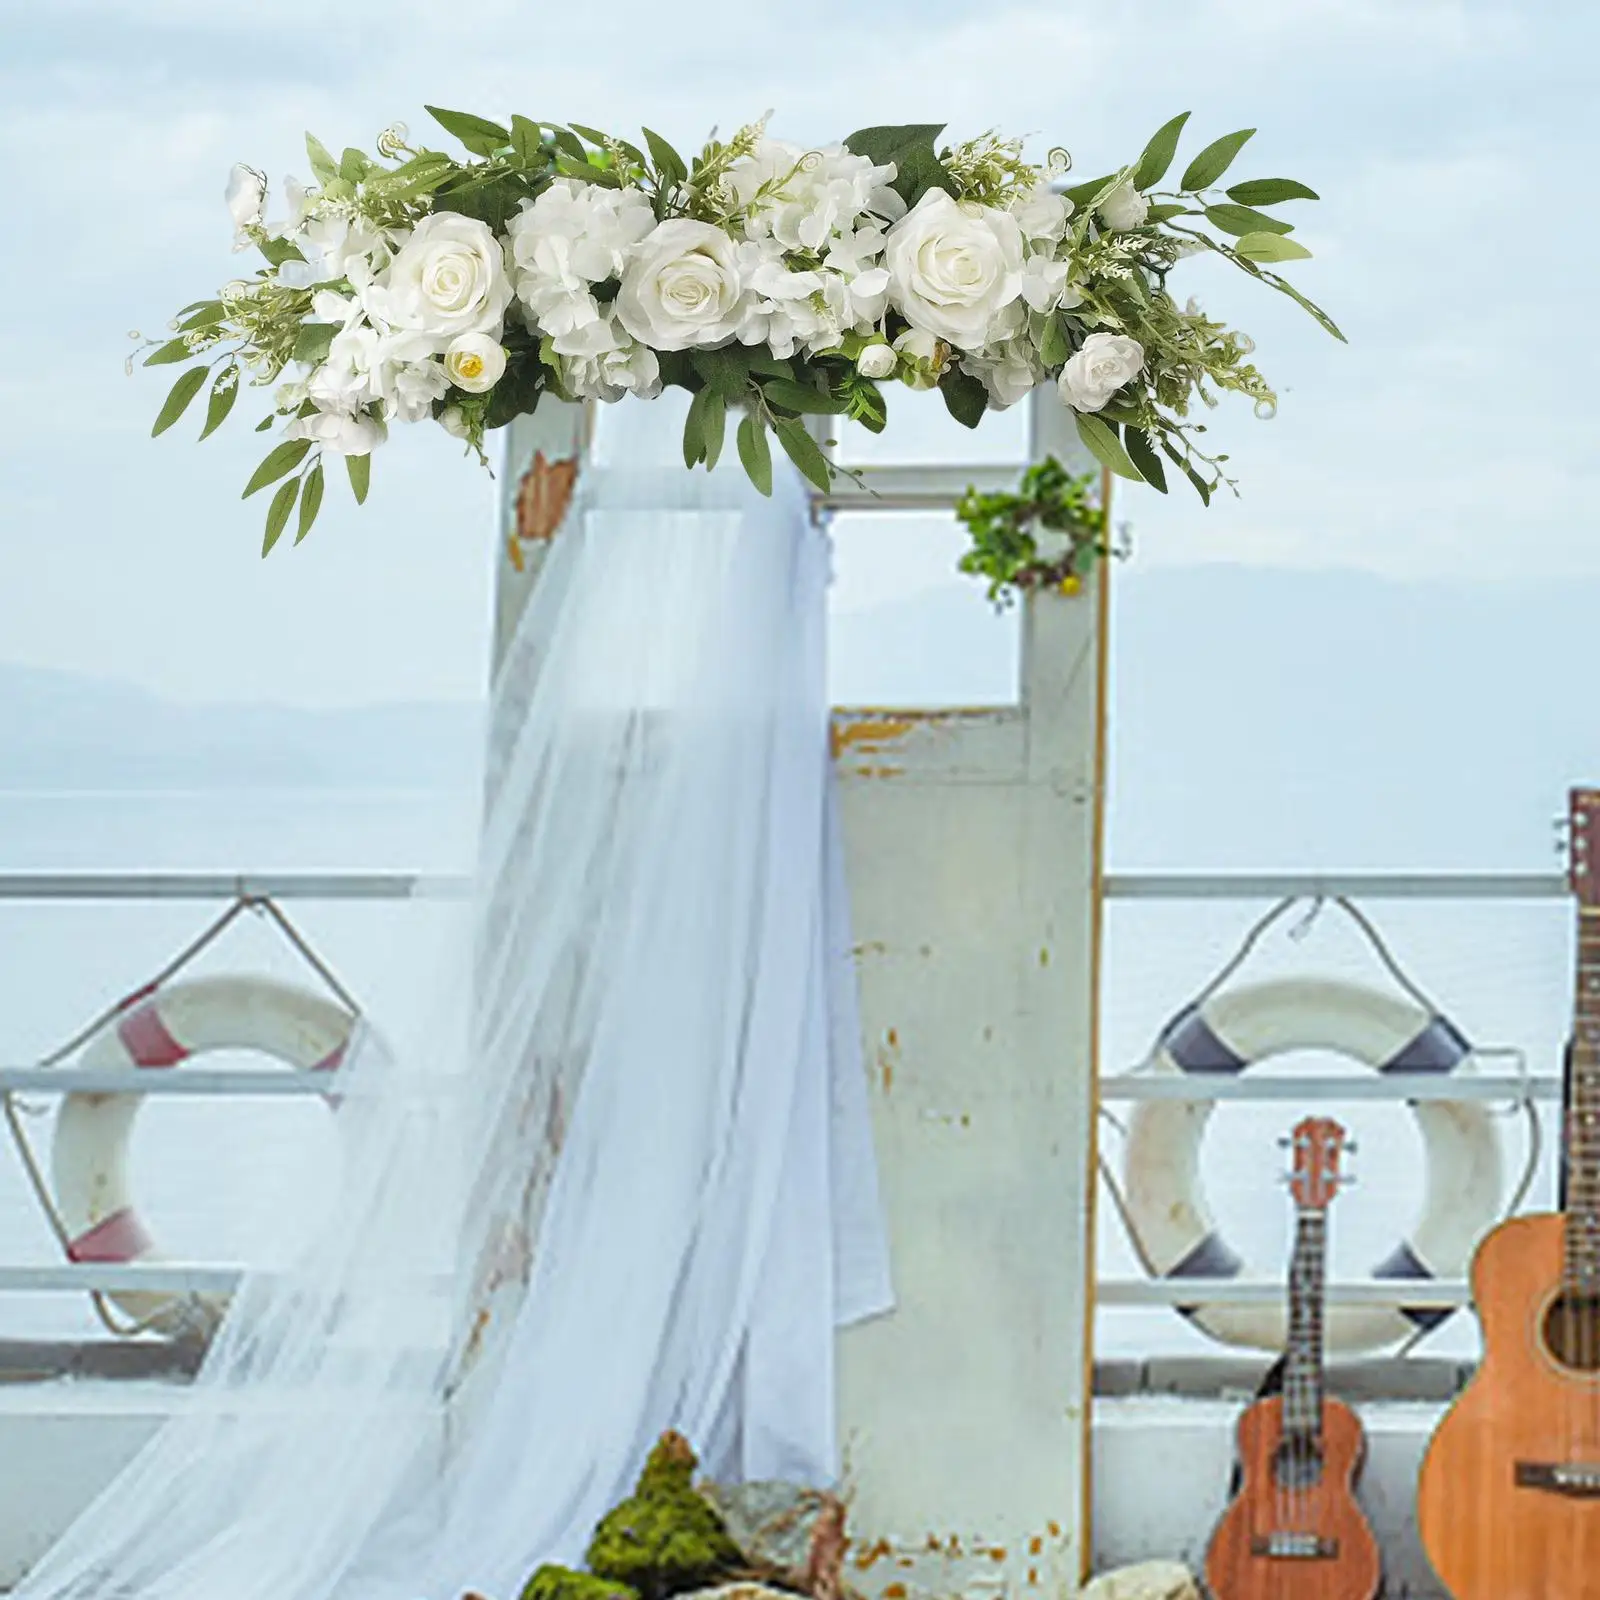 Artificial Floral Swag Door Wreath Welcome Sign Arrangements Wedding Arch Flowers for Celebration Door Ornaments